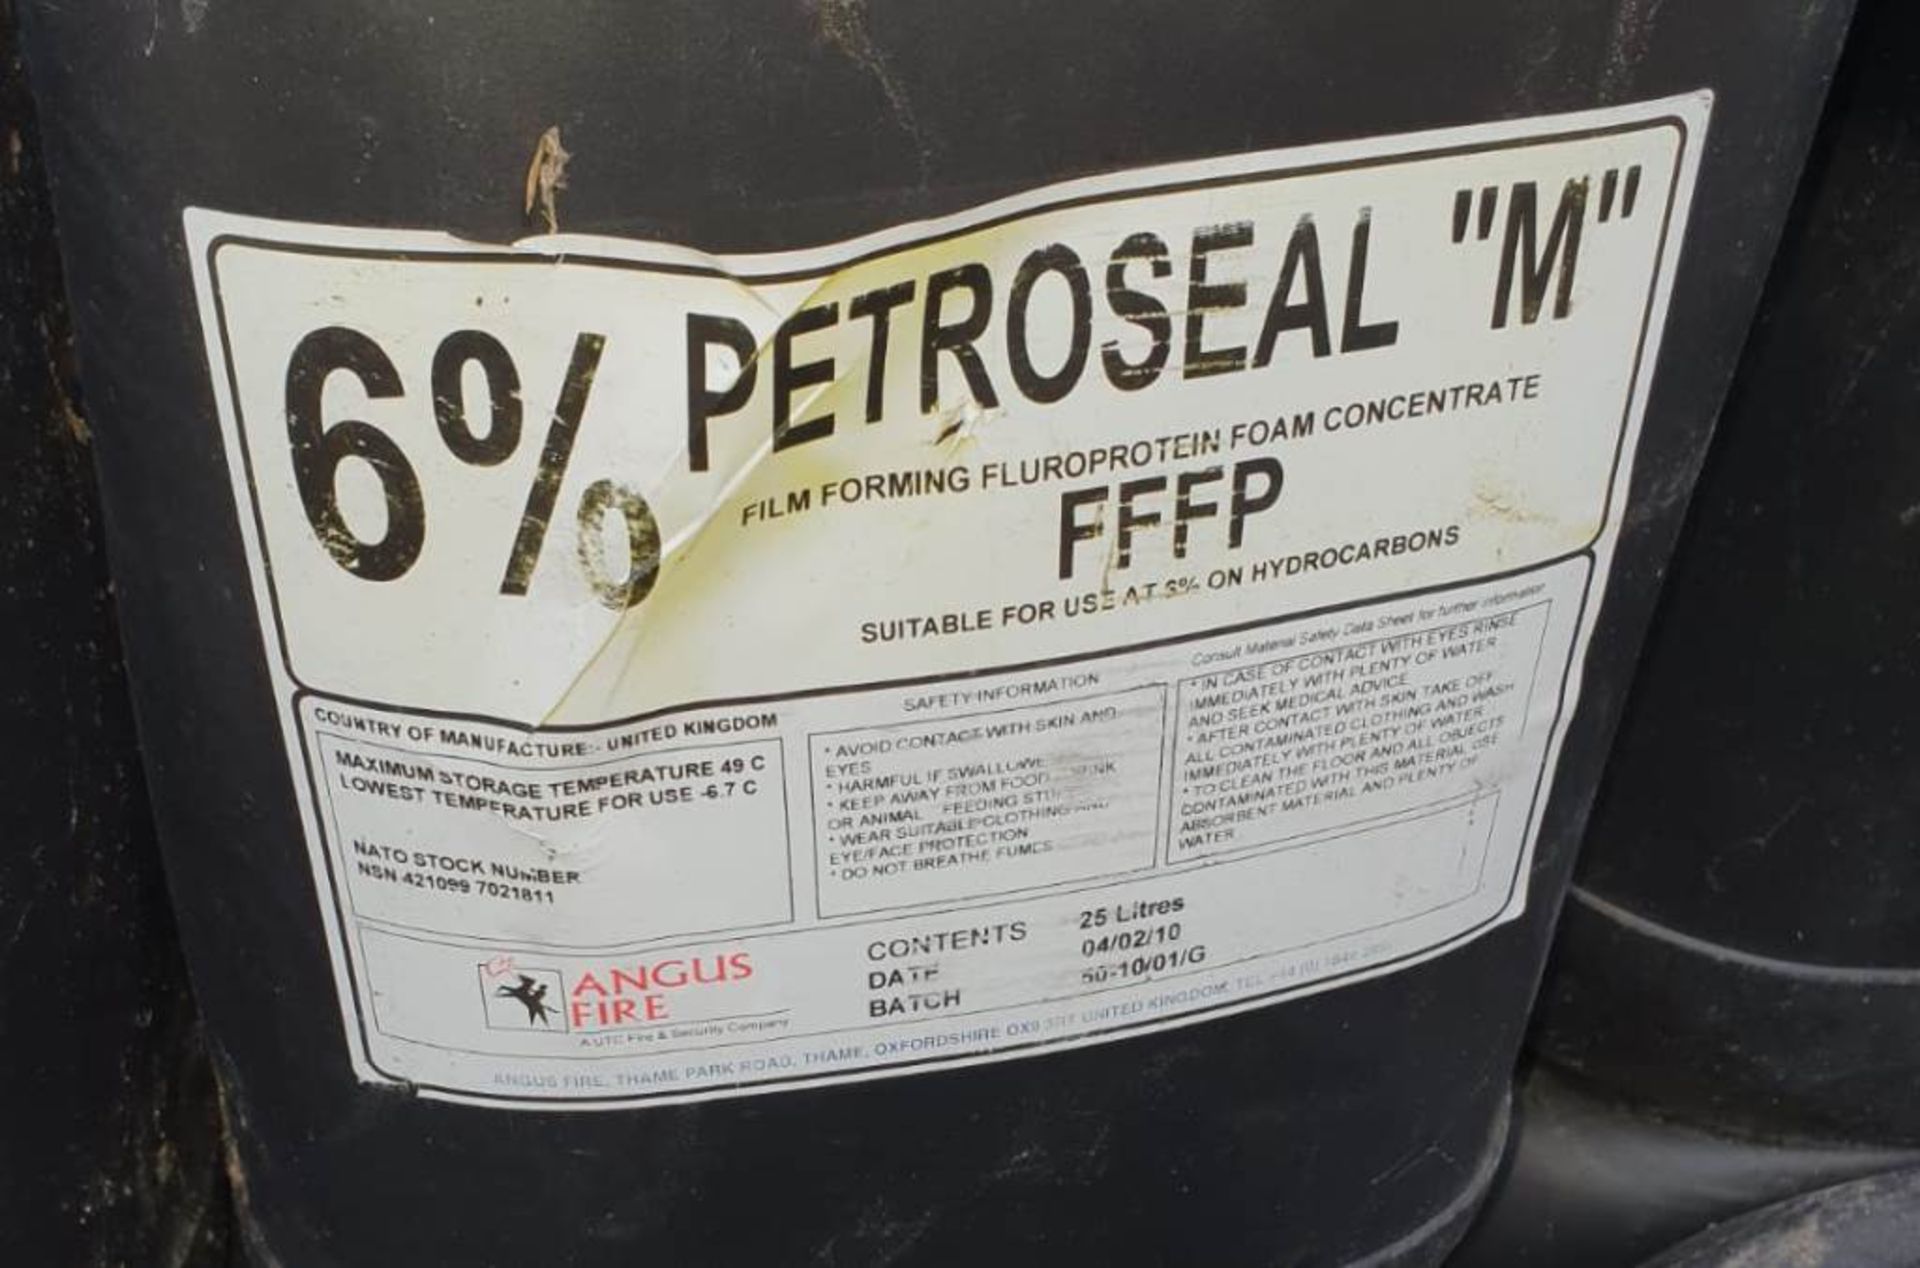 18x Angus Fire 6% Petroseal 'M' Film Foaming Fluroprotein Foam Concentrate - 25L - Please check desc - Image 3 of 3